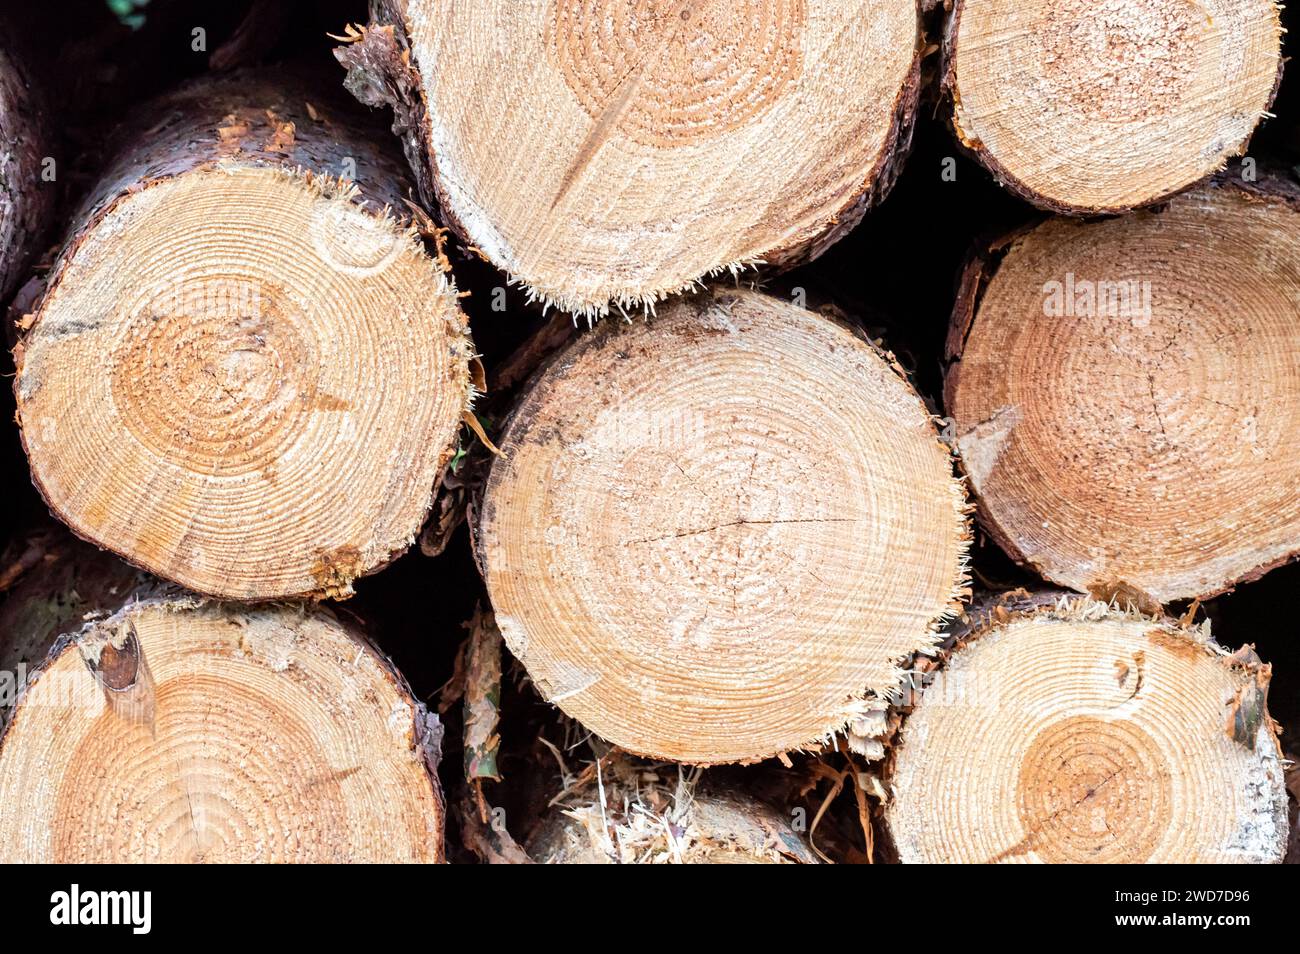 Un primer plano de una pila apilada de troncos de madera Foto de stock